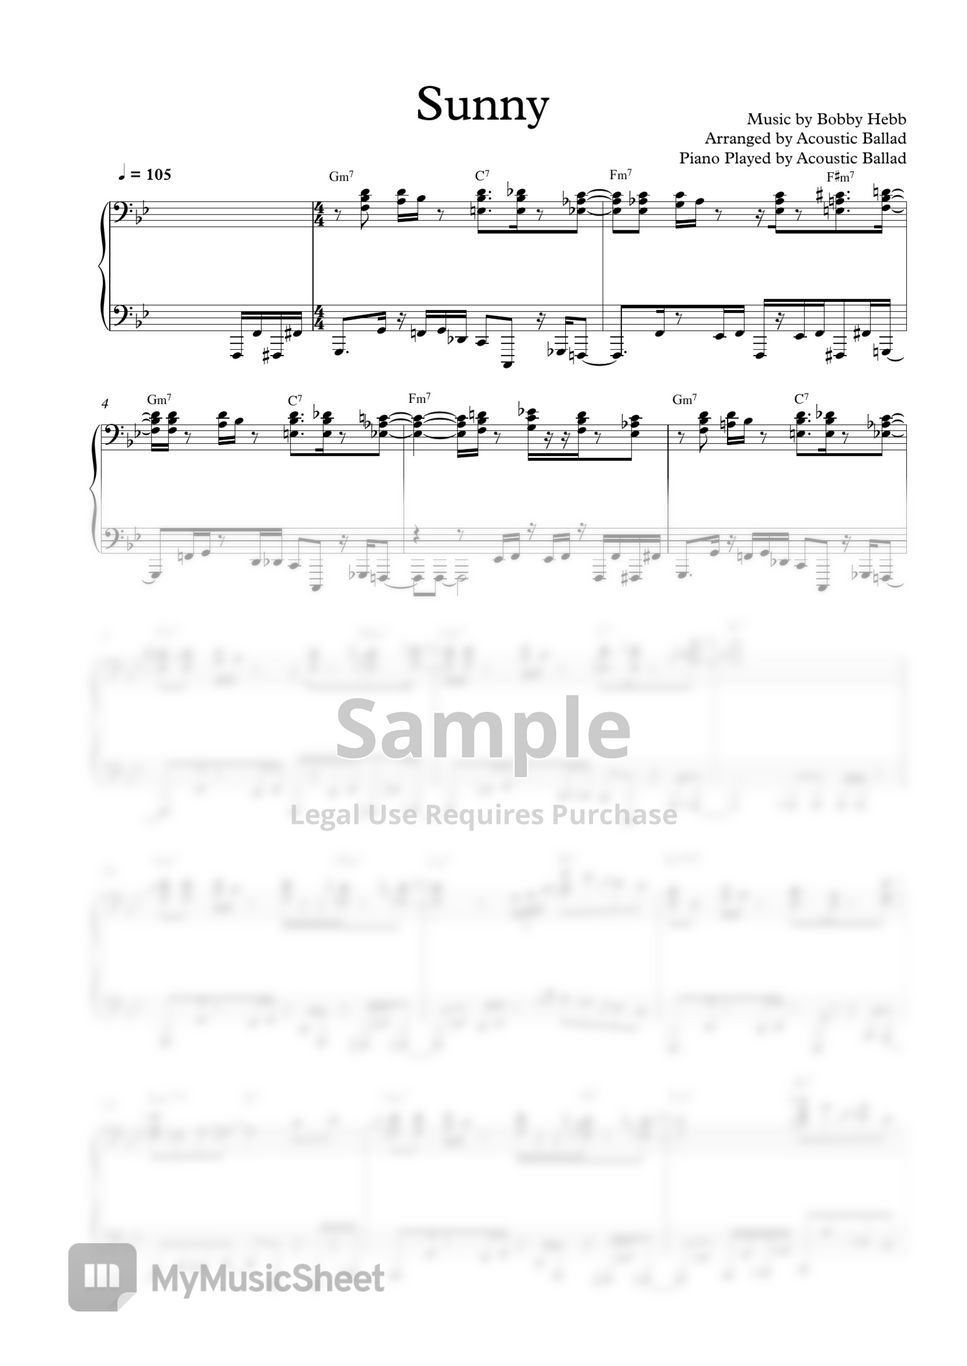 Bobby Hebb - Sunny (Solo Piano Ver.) Sheets by Acoustic Ballad